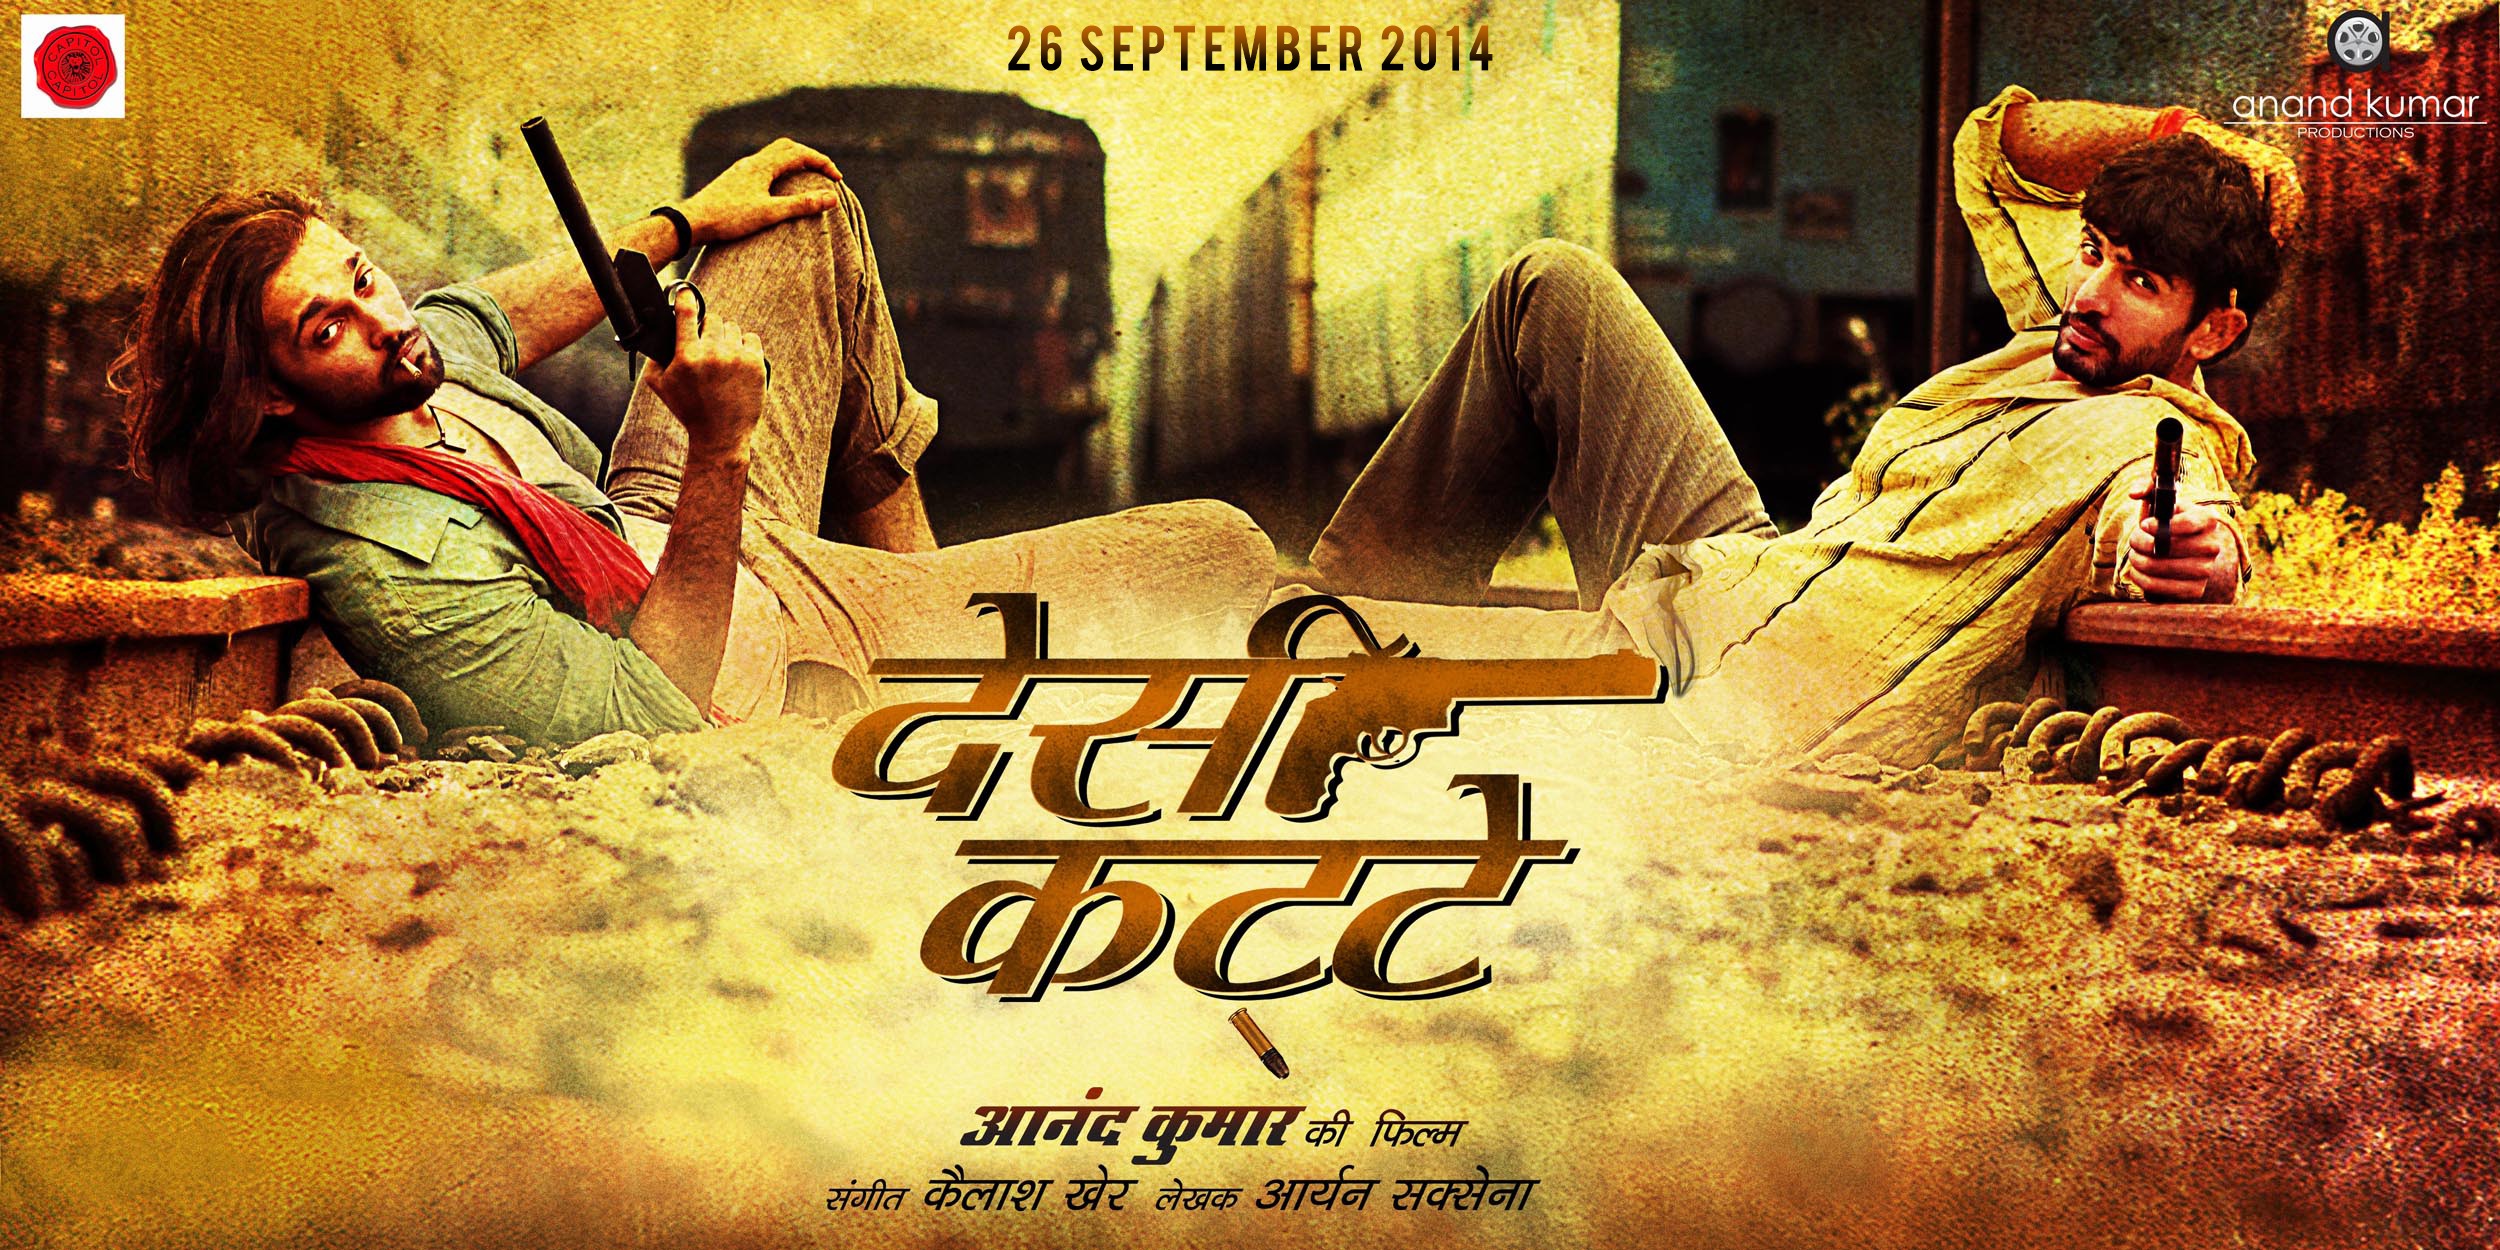 Mega Sized Movie Poster Image for Desi Kattey (#4 of 6)